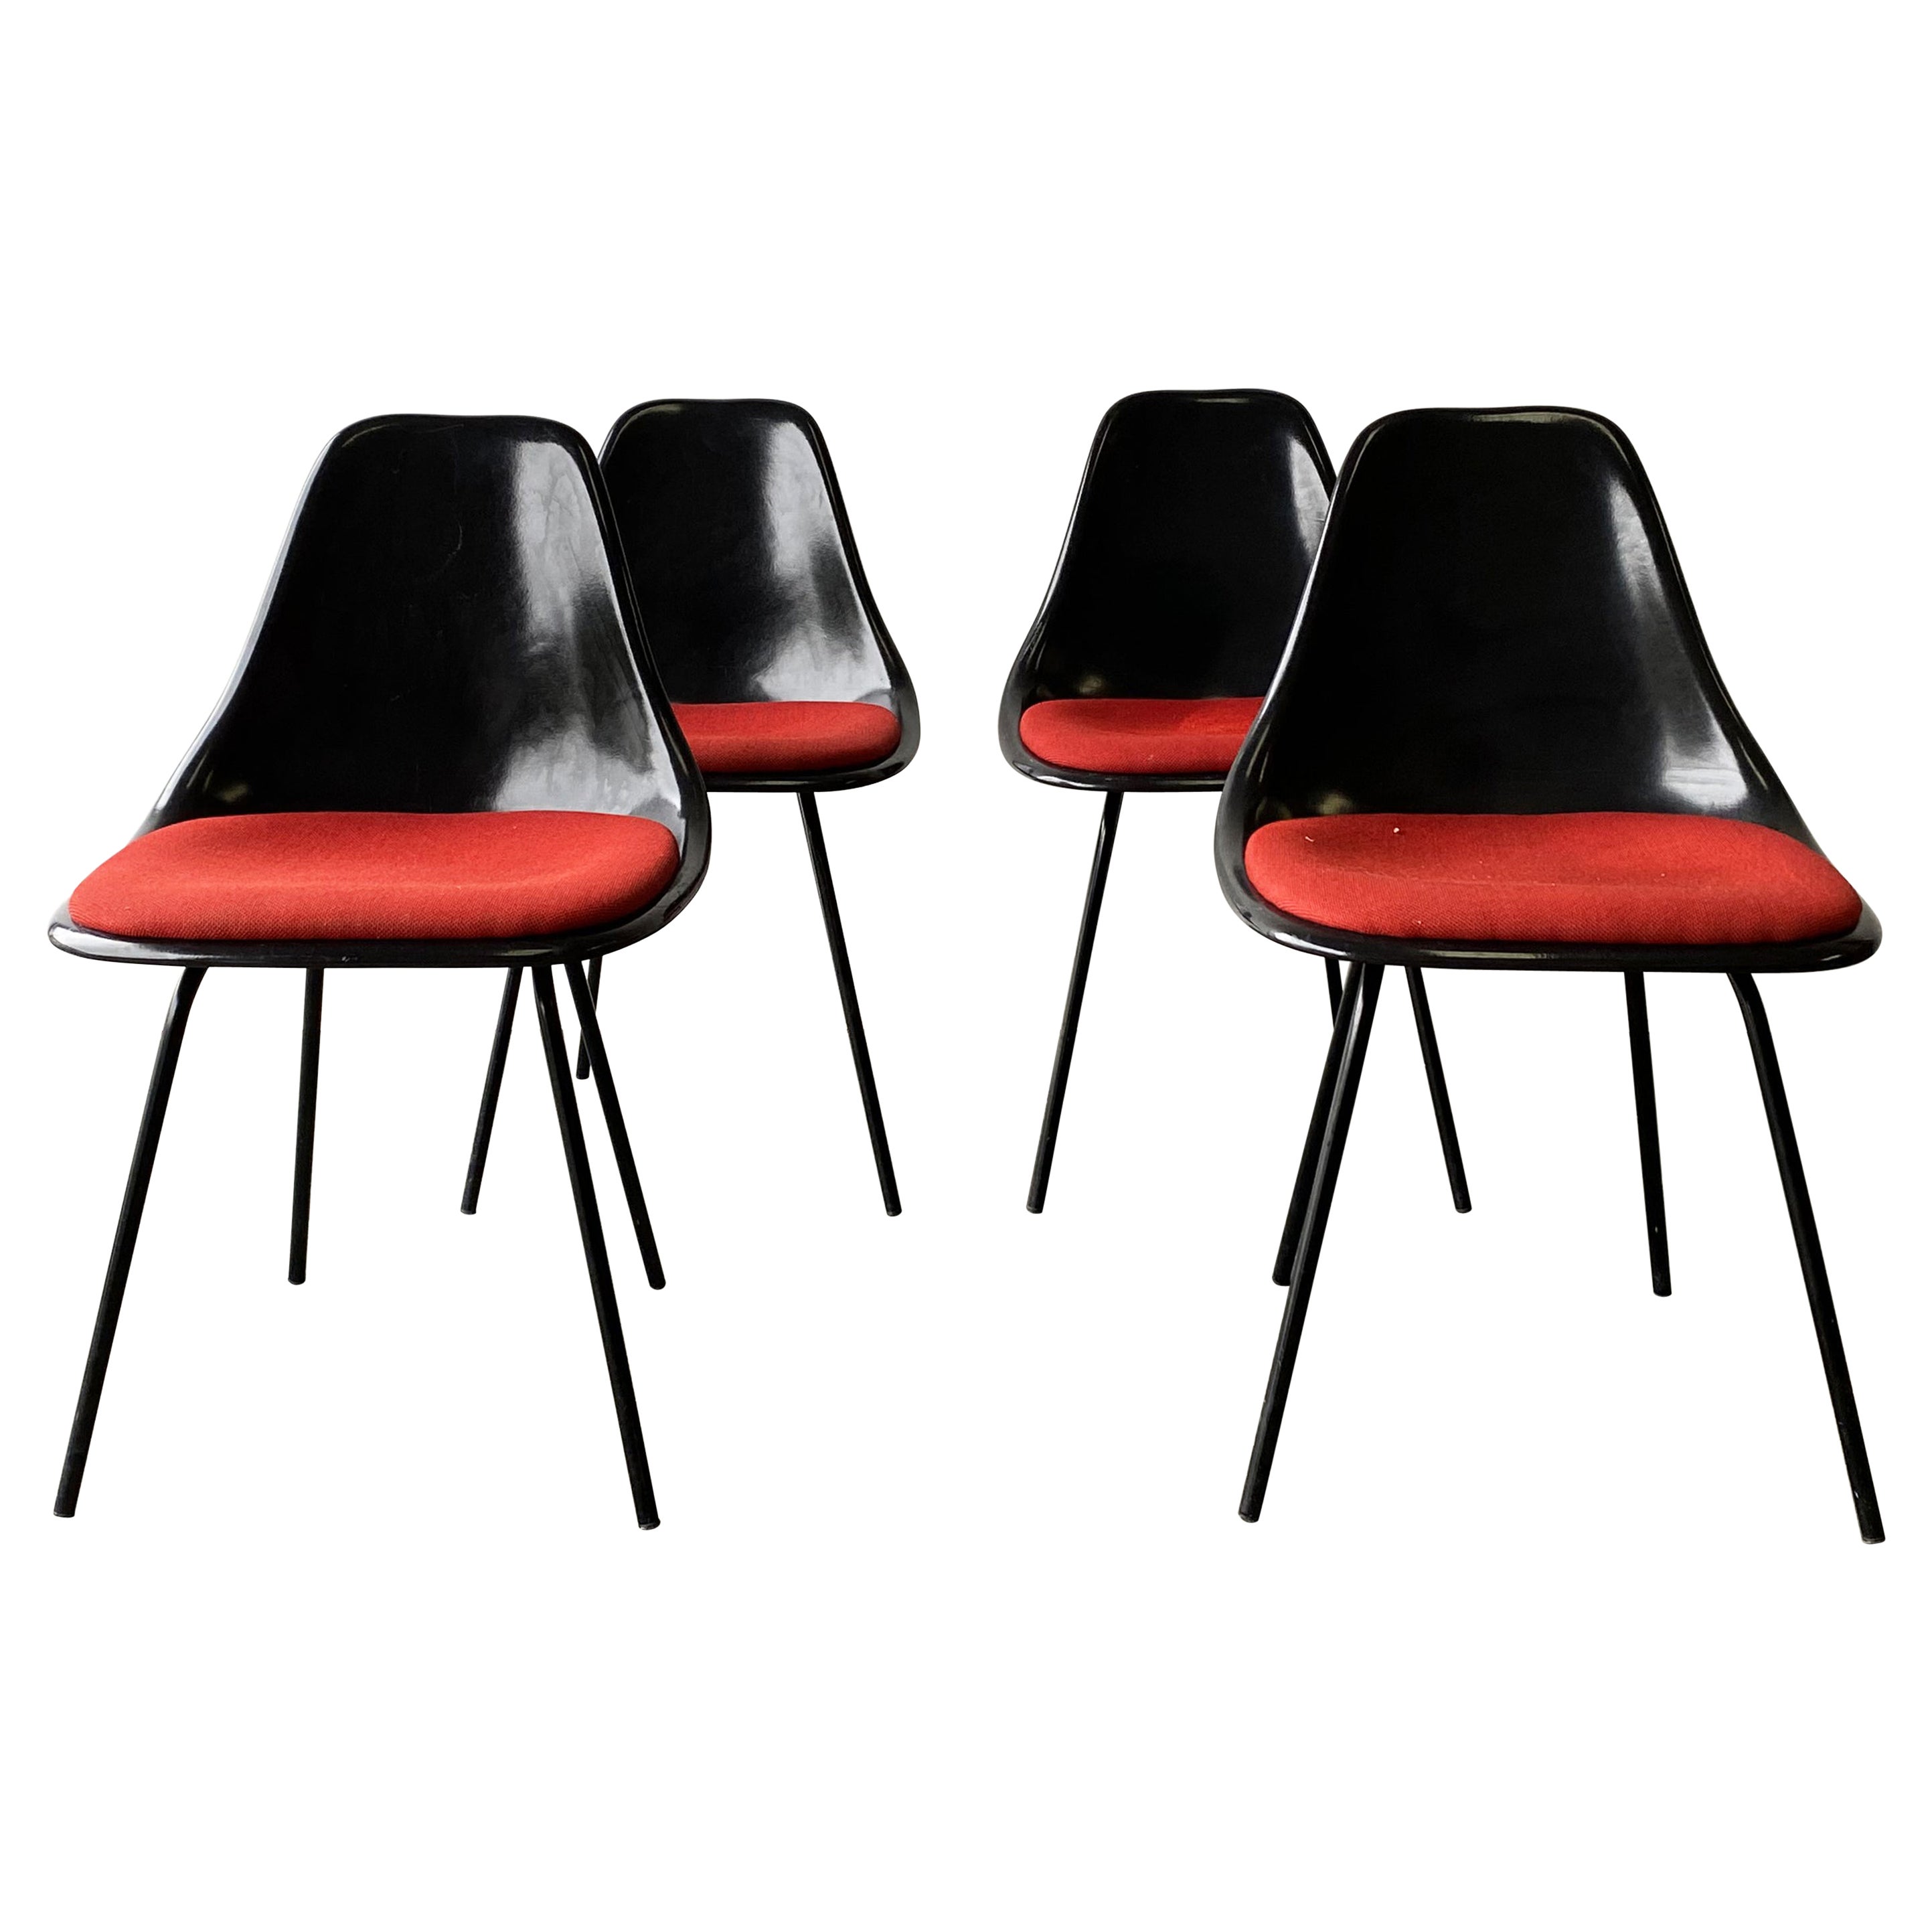 Set 4 mid century 1960’s chairs by Maurice Burke for Arkana after Eero Saarinen For Sale